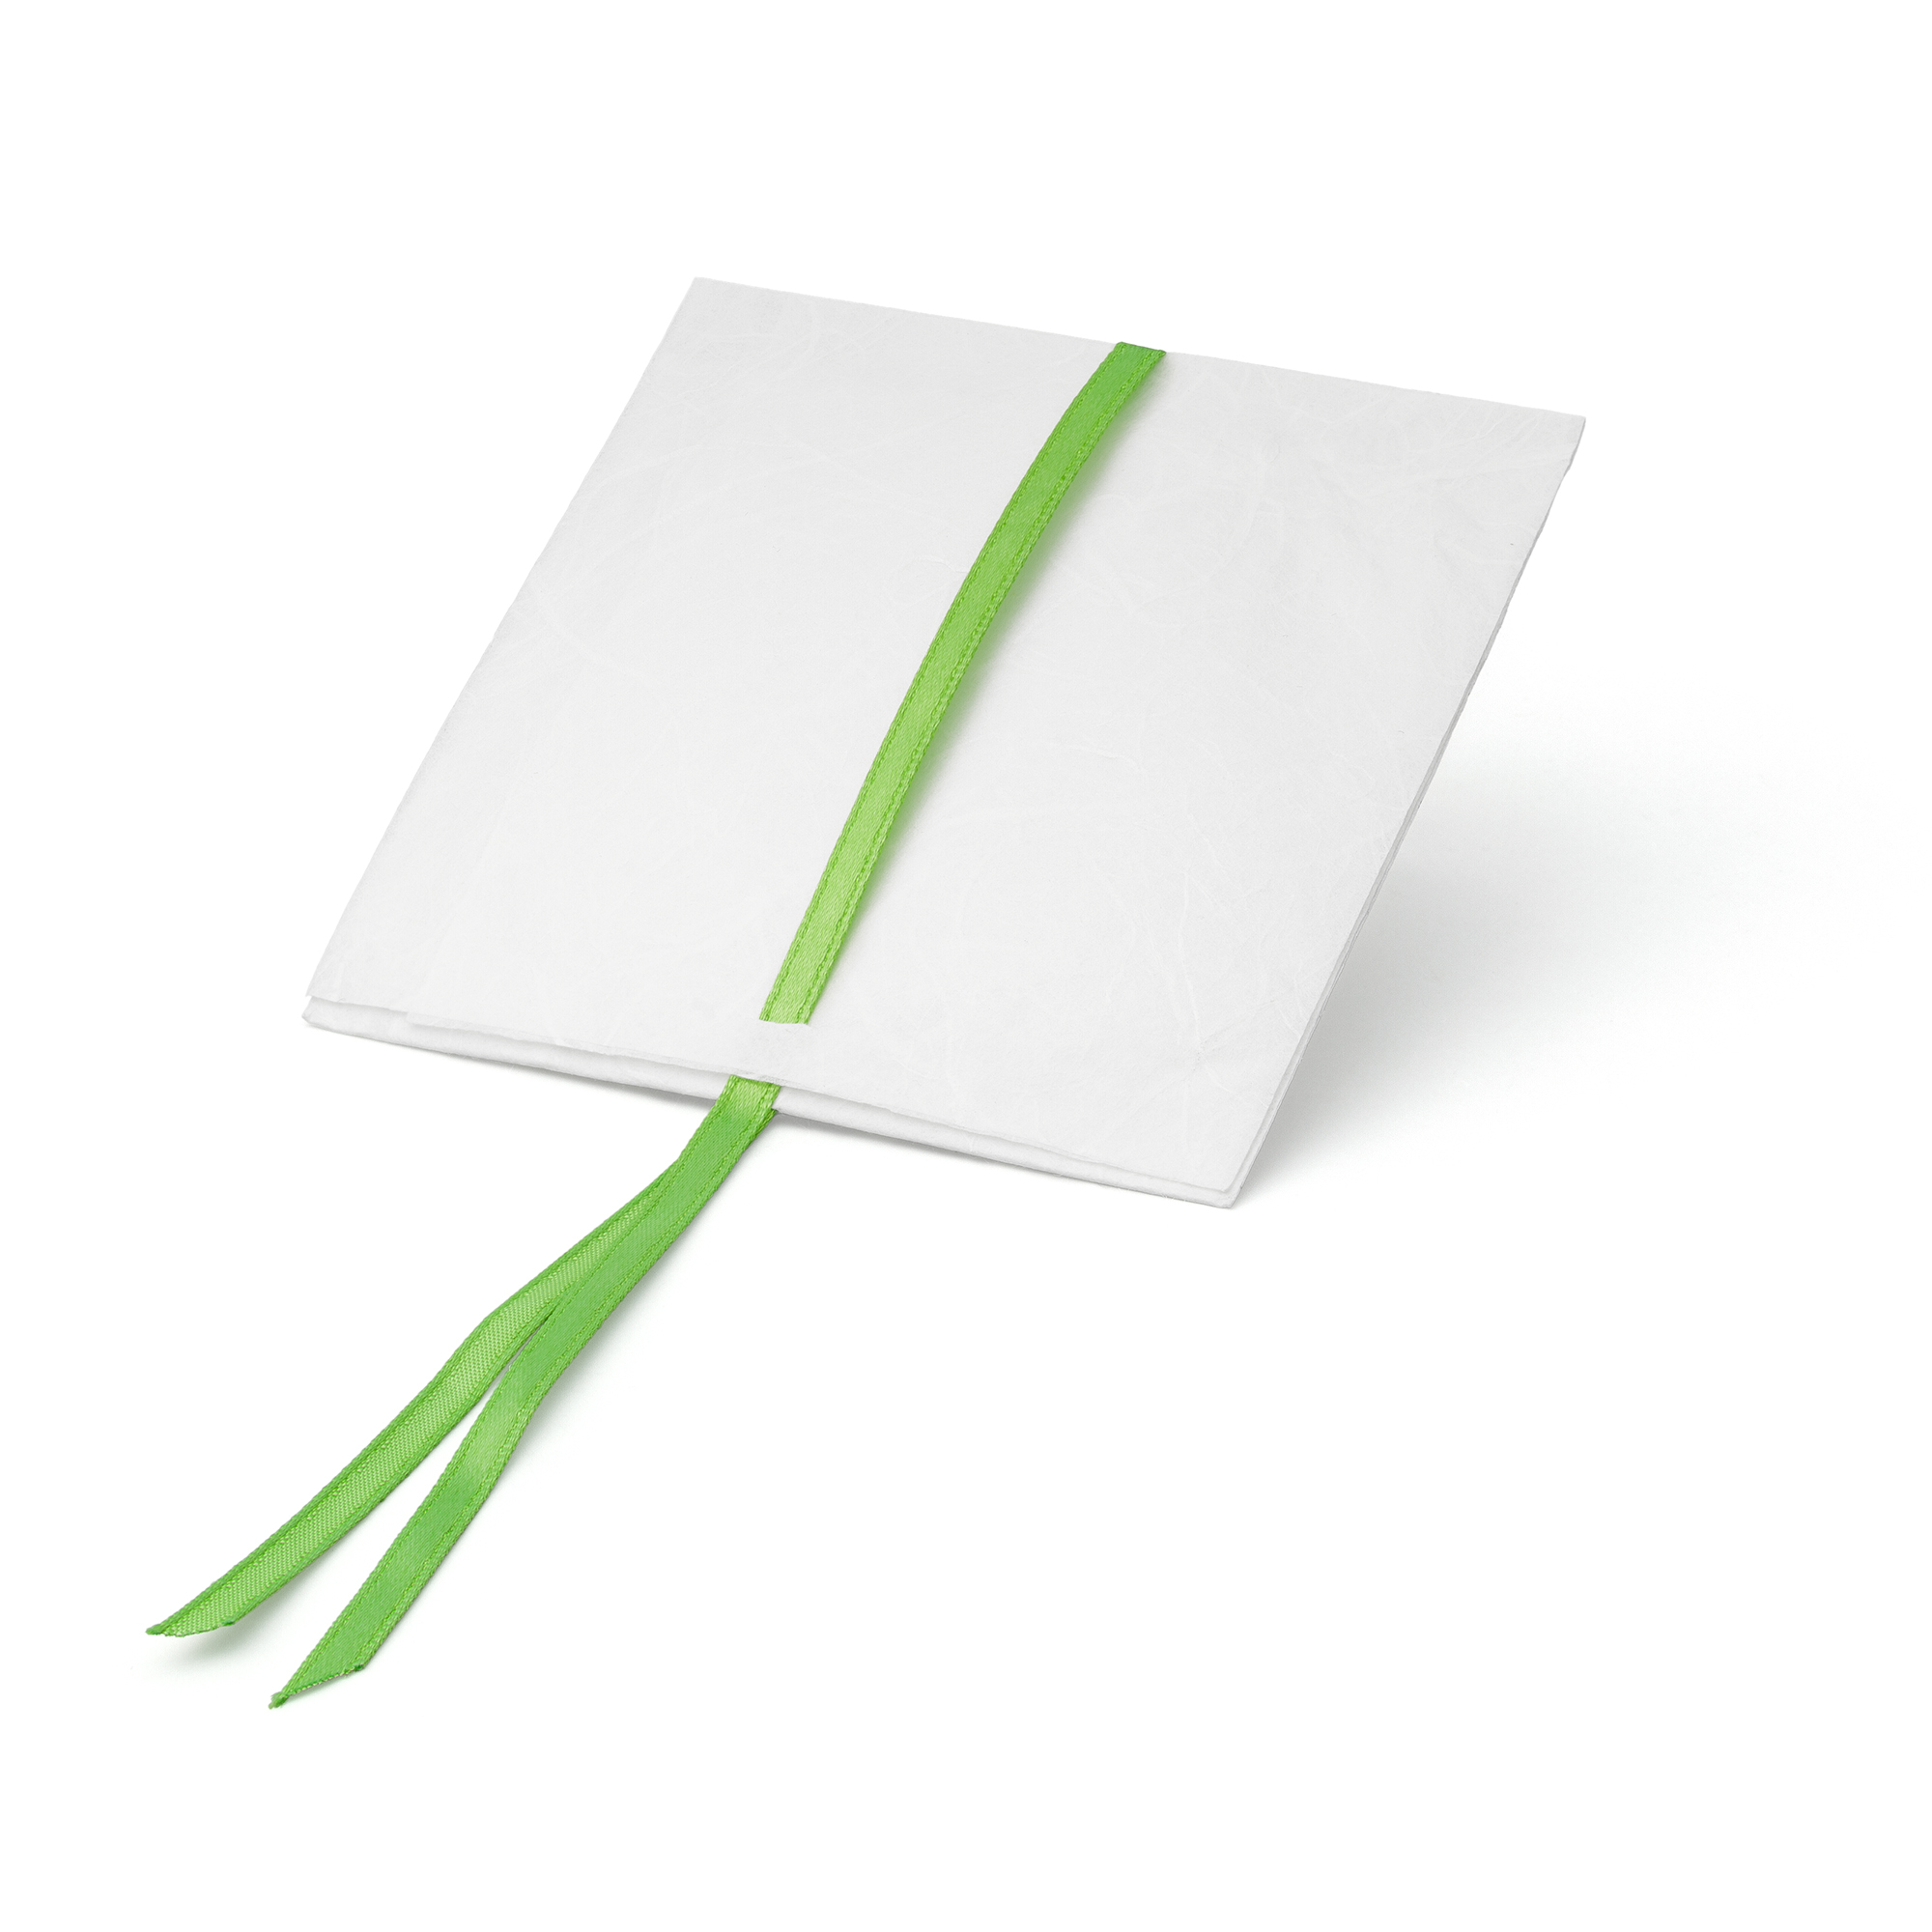 Paperbag groß, 100 x 100 mm, weiß/grünes Band